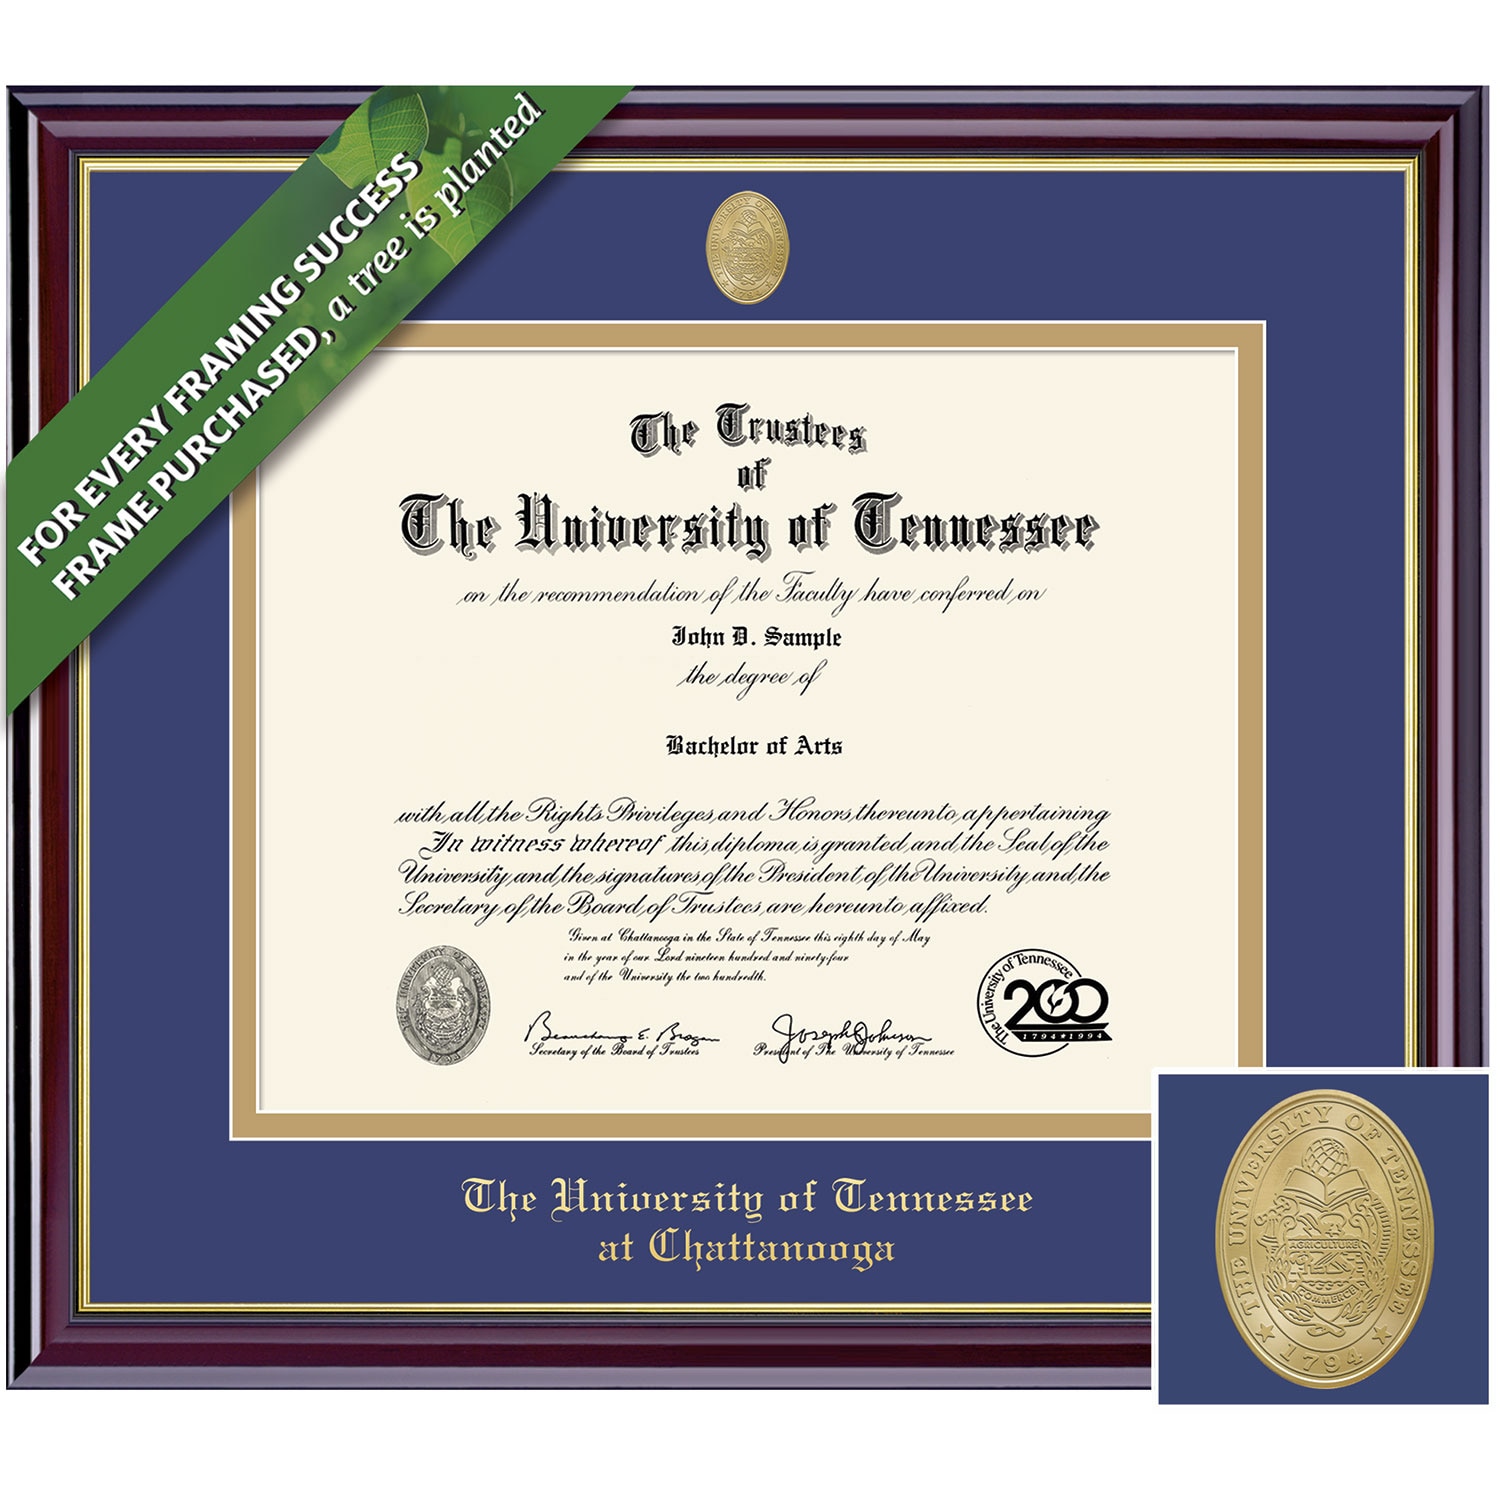 Framing Success 14 x 17 Windsor Gold Medallion Bachelors, Masters Diploma Frame